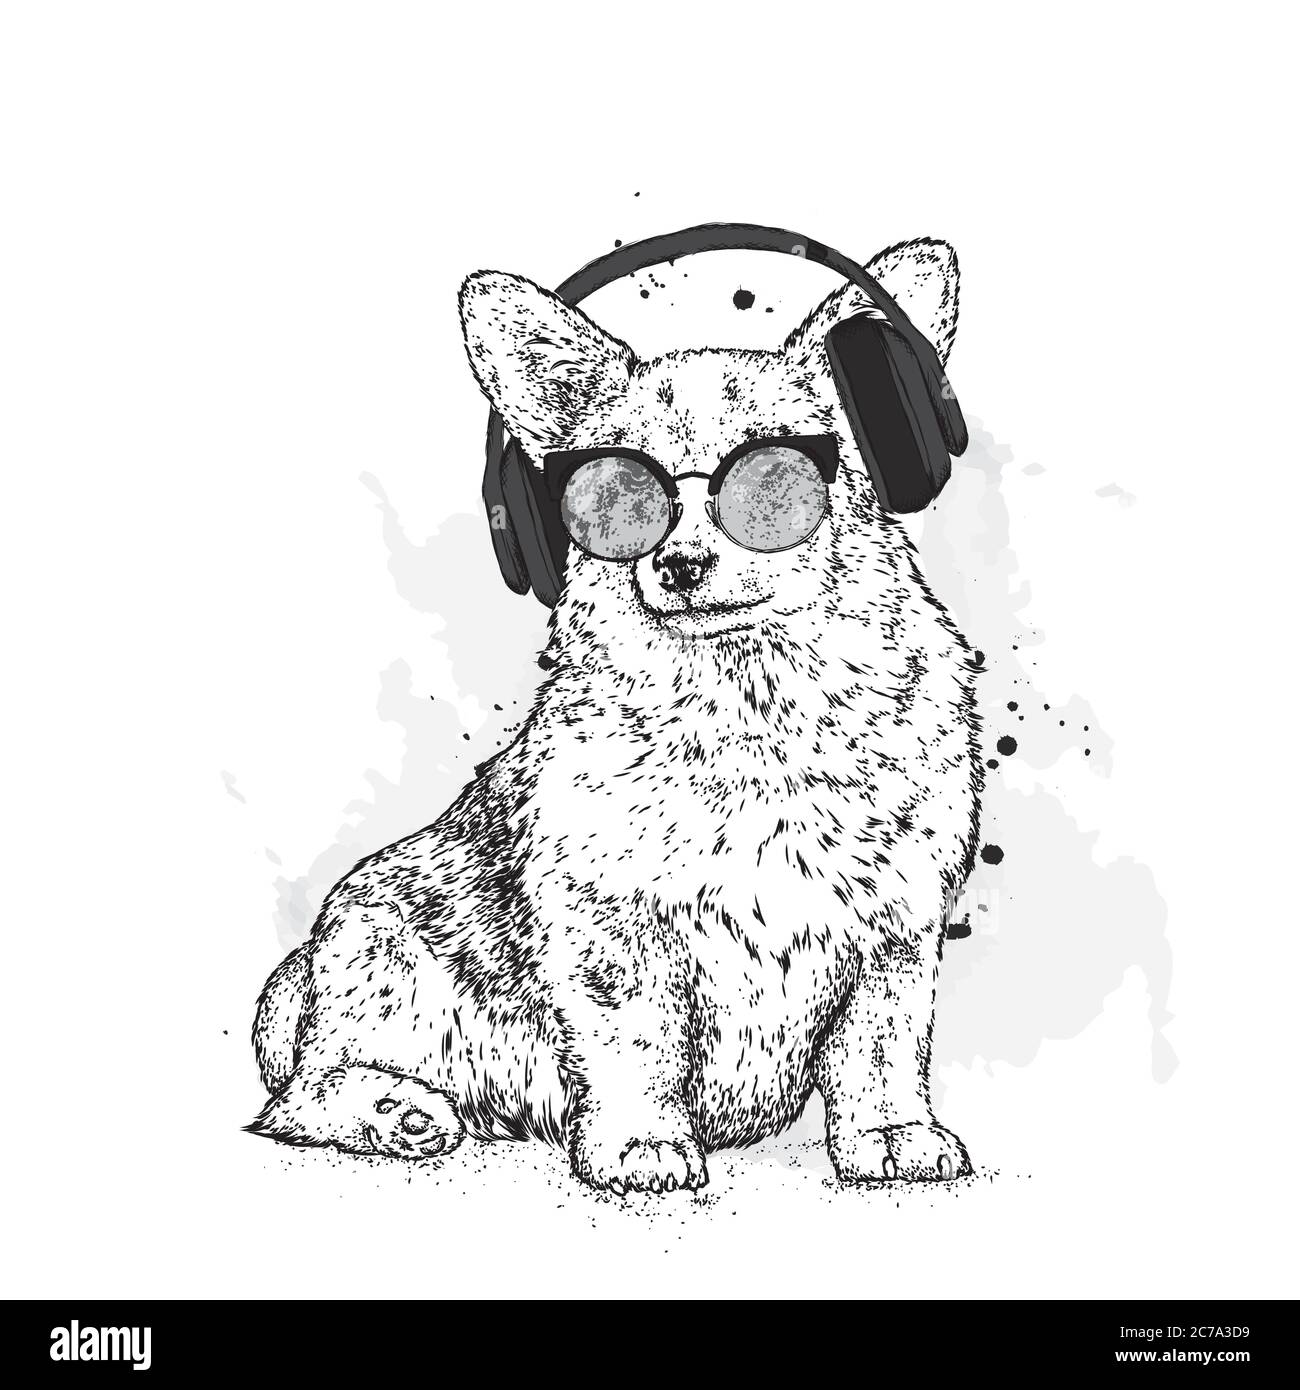 Dog wearing headphones Black and White Stock Photos & Images - Alamy